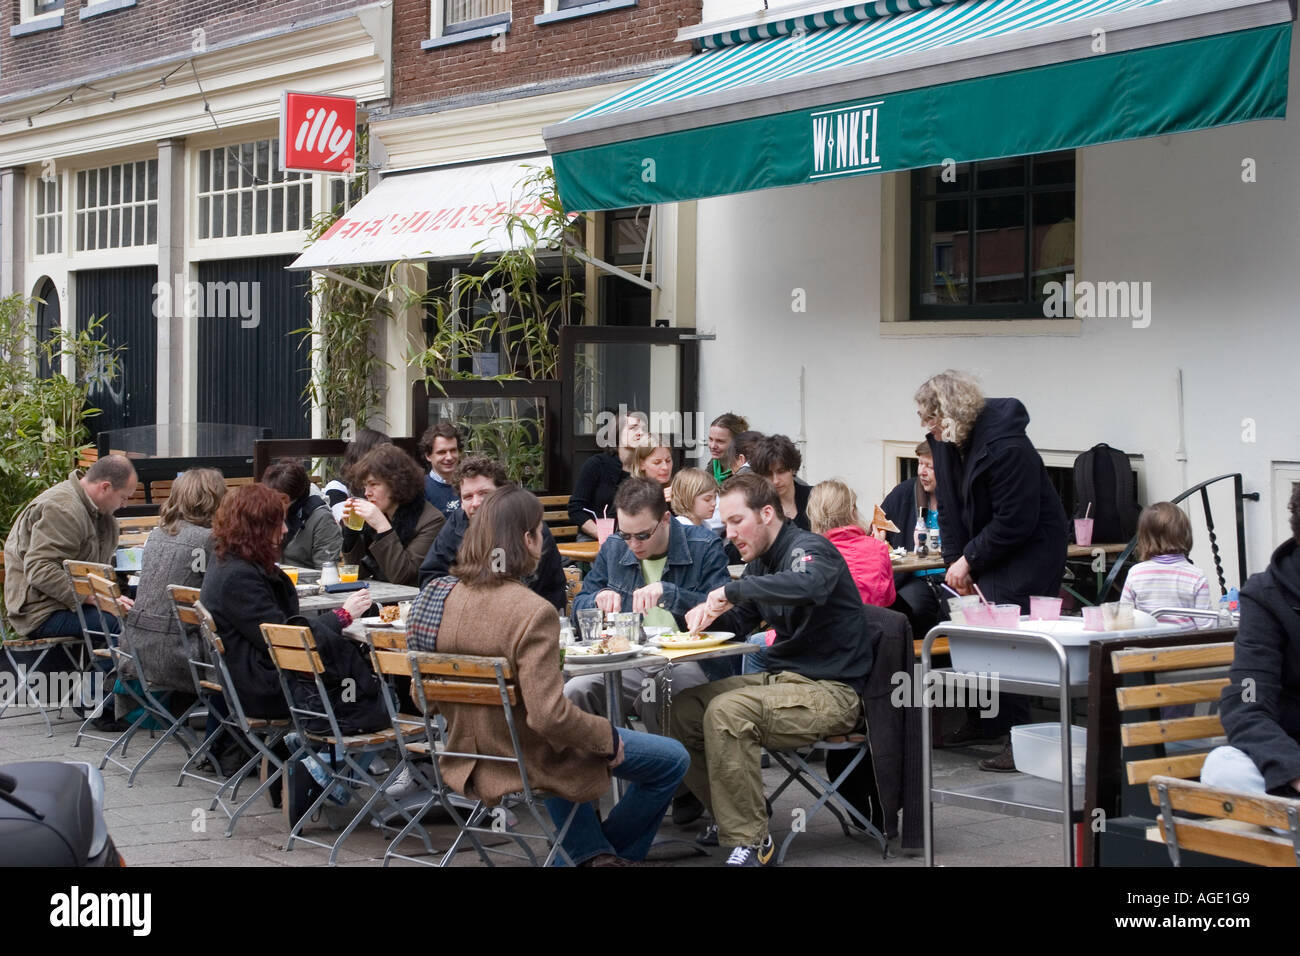 Cafe Winkel Jordaan Amsterdam The Netherlands Stock Photo - Alamy